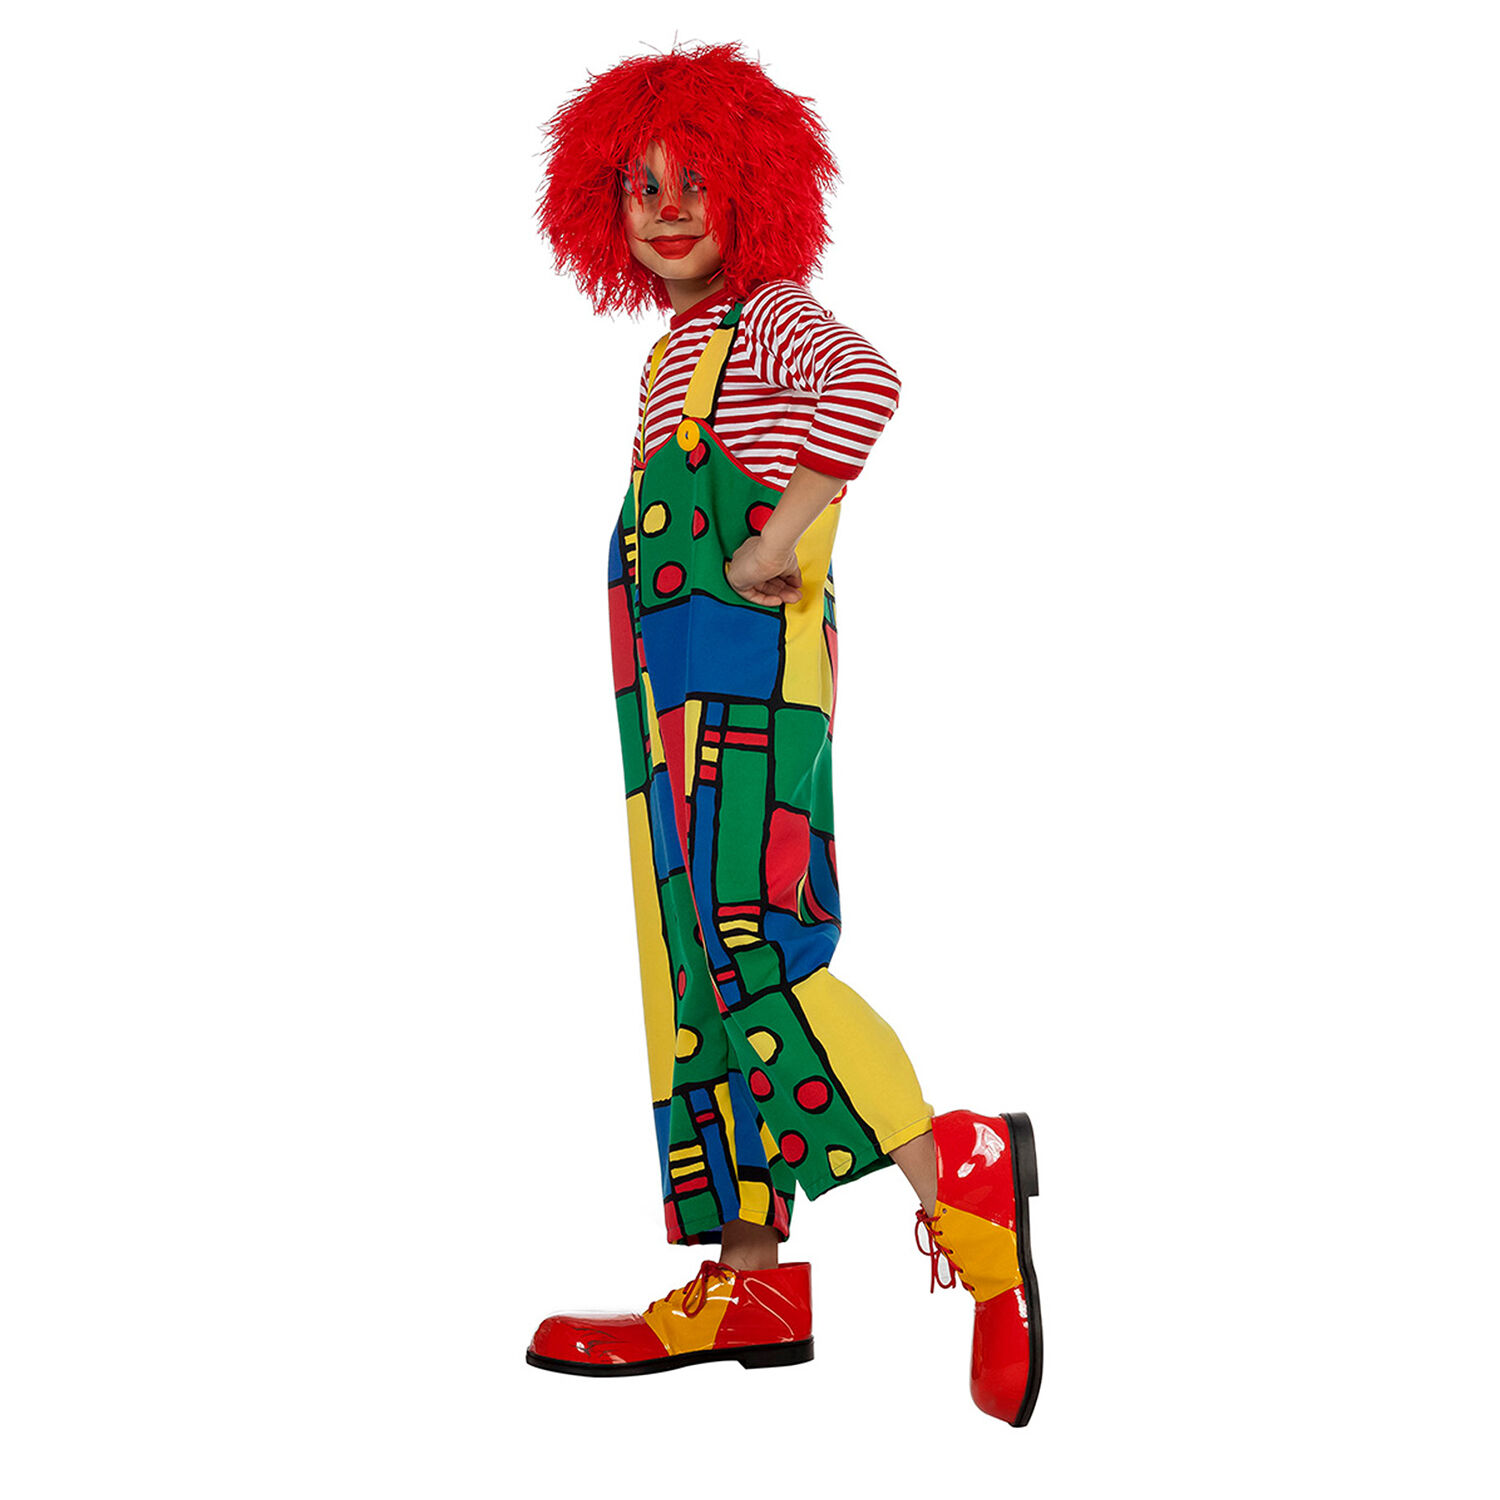 NEU Kinder-Kostüm Clown-Latzhose Mondrian, bunt, Gr. 116 Bild 2